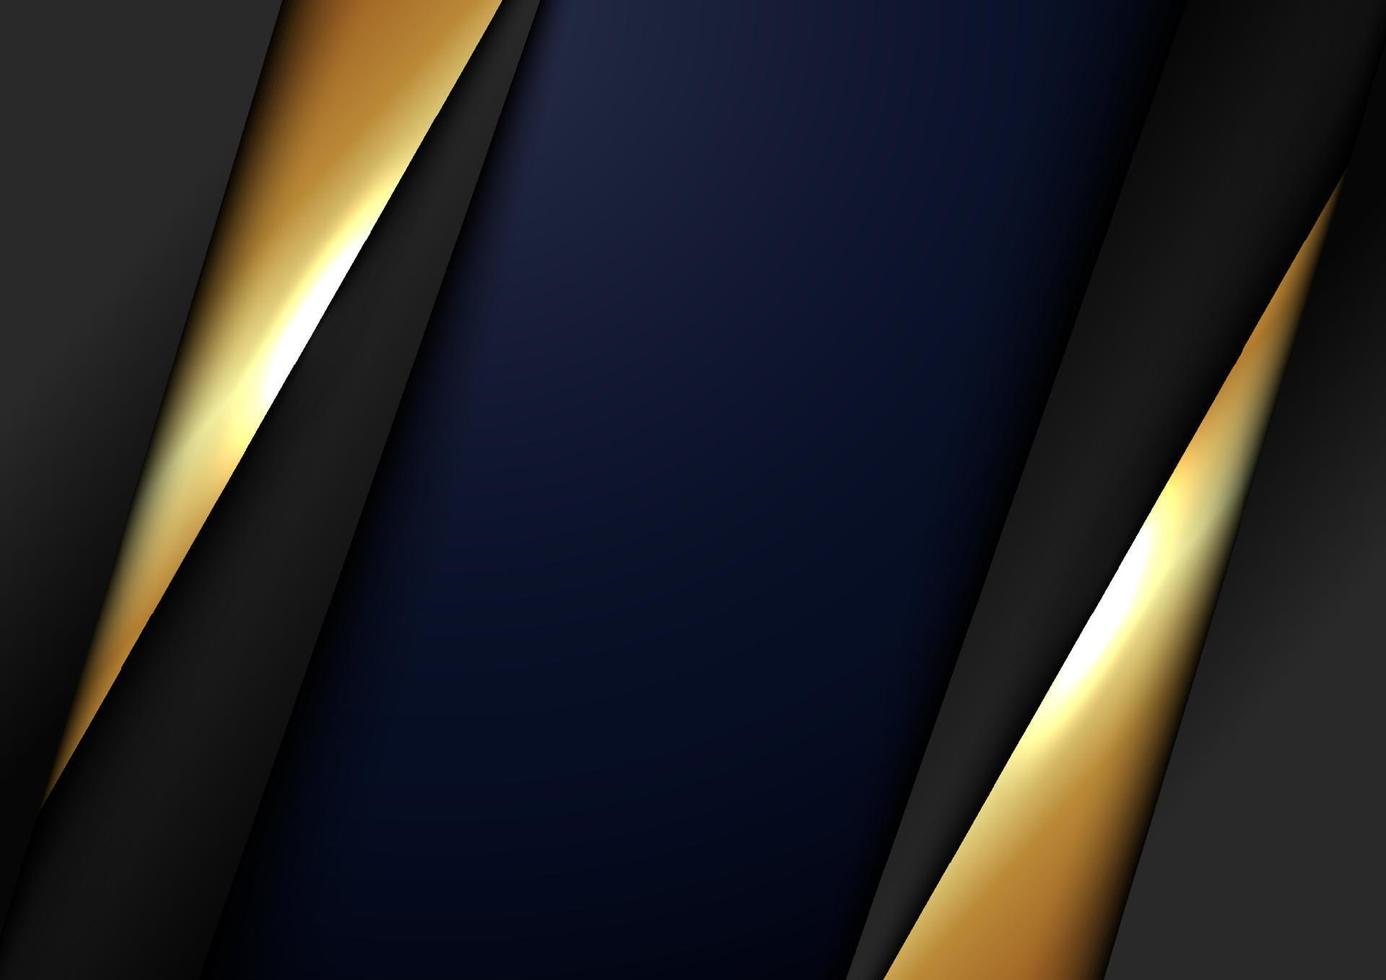 modelo elegante abstrato triângulo preto e dourado dimensão sobreposta no estilo de luxo de fundo azul escuro vetor